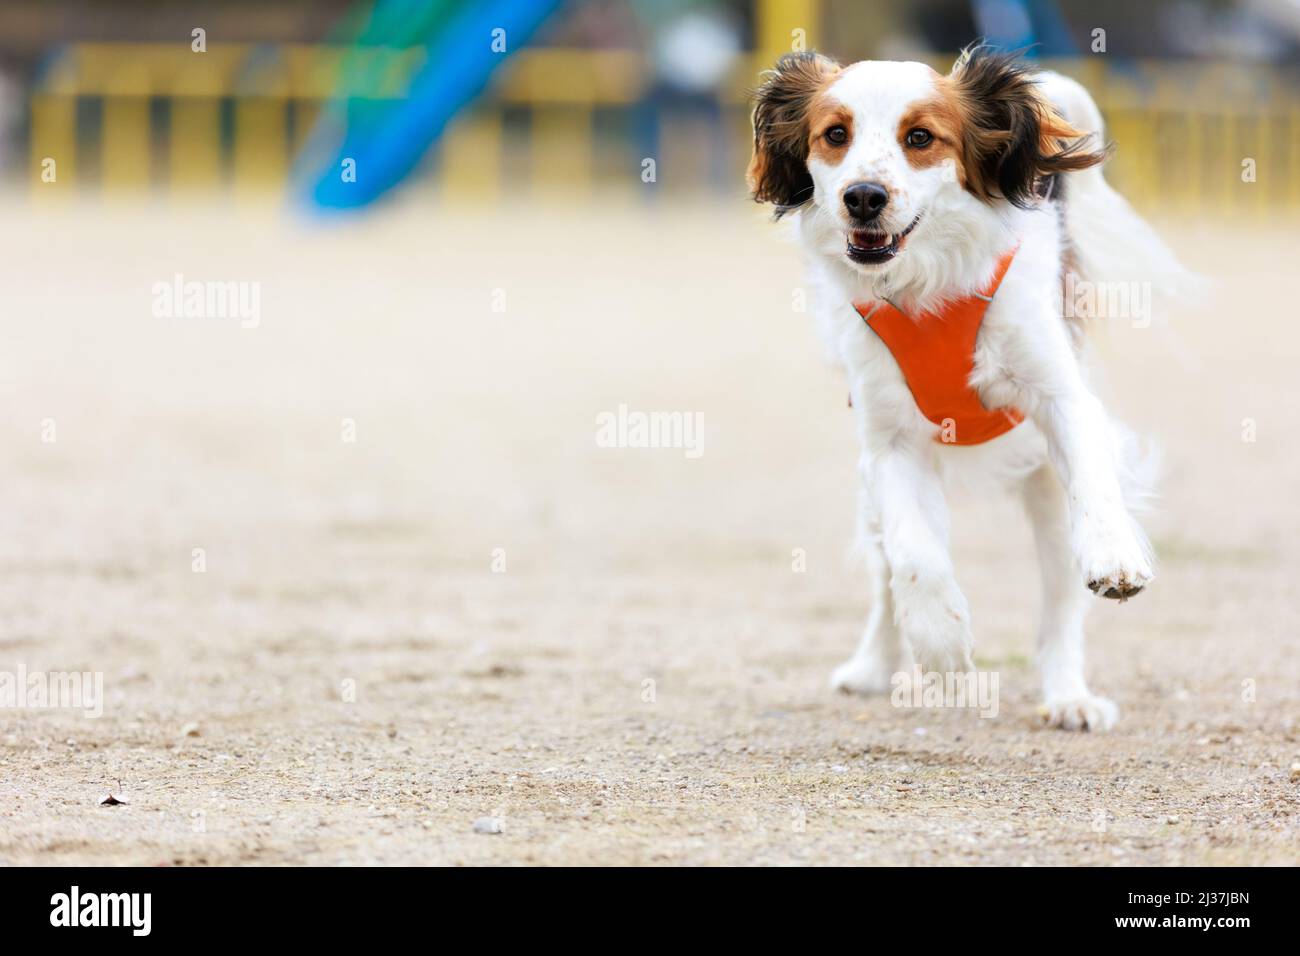 Happy purebred dog kooiker running towards camera. Stock Photo